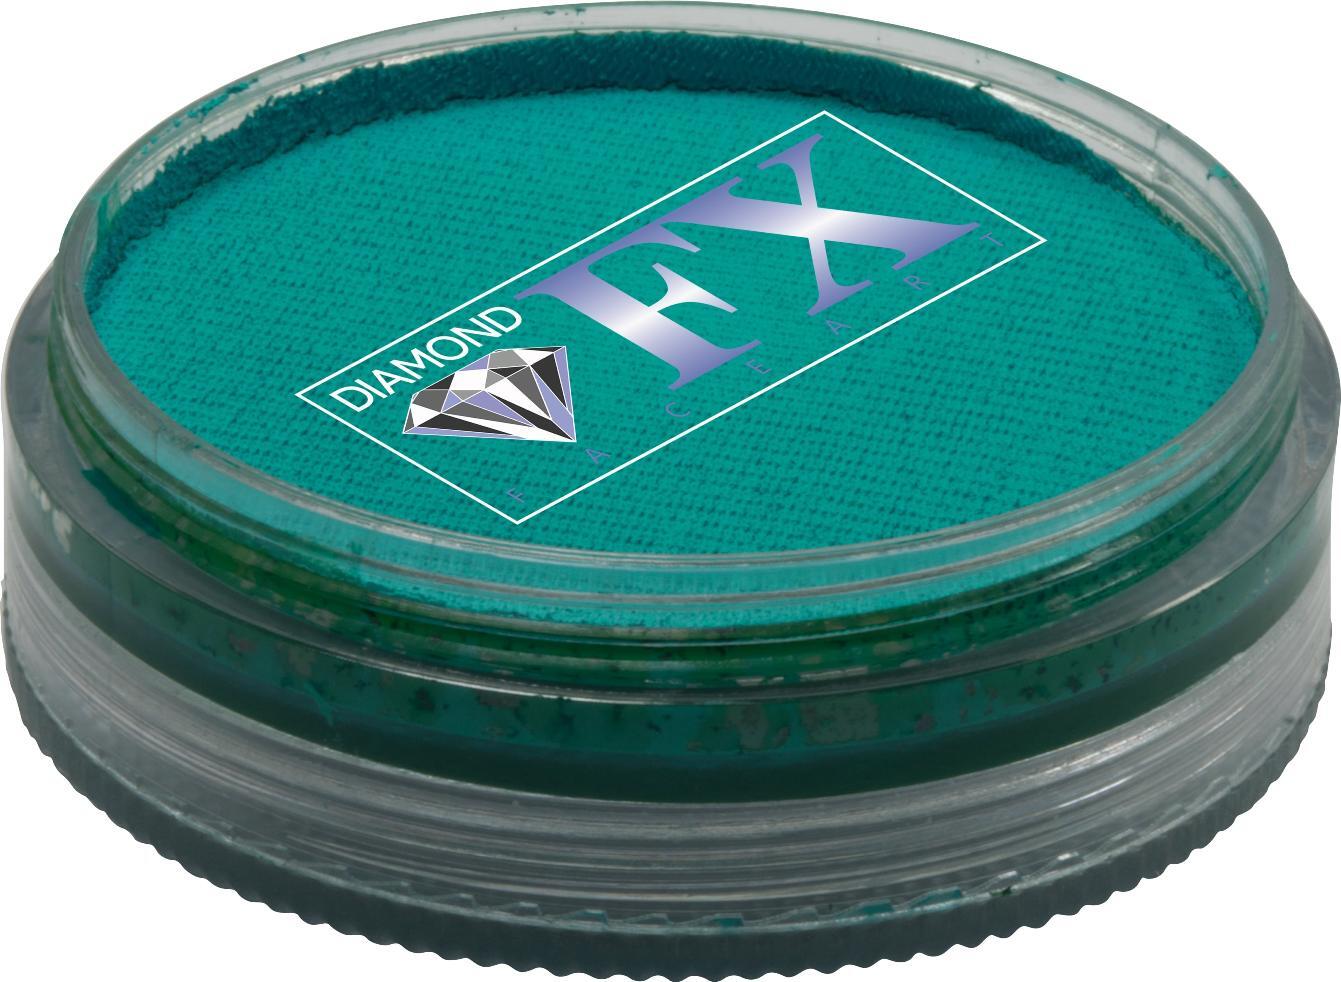 Diamond FX Sea Green 45g - Small Image